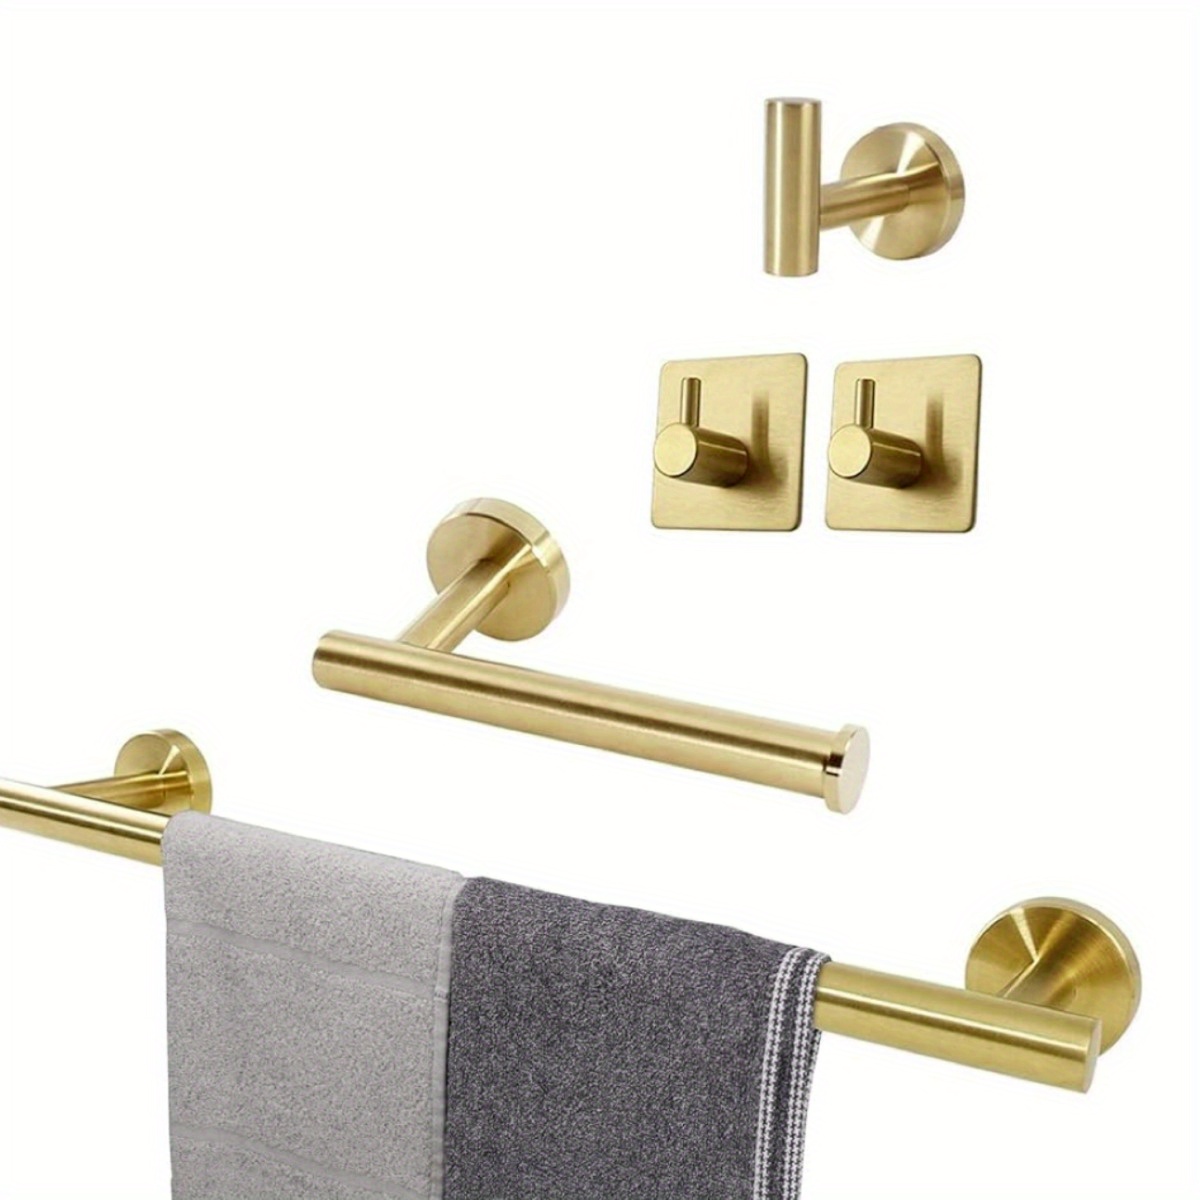 

5pcs Bathroom Hardware Set, Sus304 Stainless Steel-towel Rack Set, Include Lengthen Hand Towel Bar, Toilet Paper Holder, 3 Robe Towel Hooks, Bathroom Accessories, Towel Bar Set